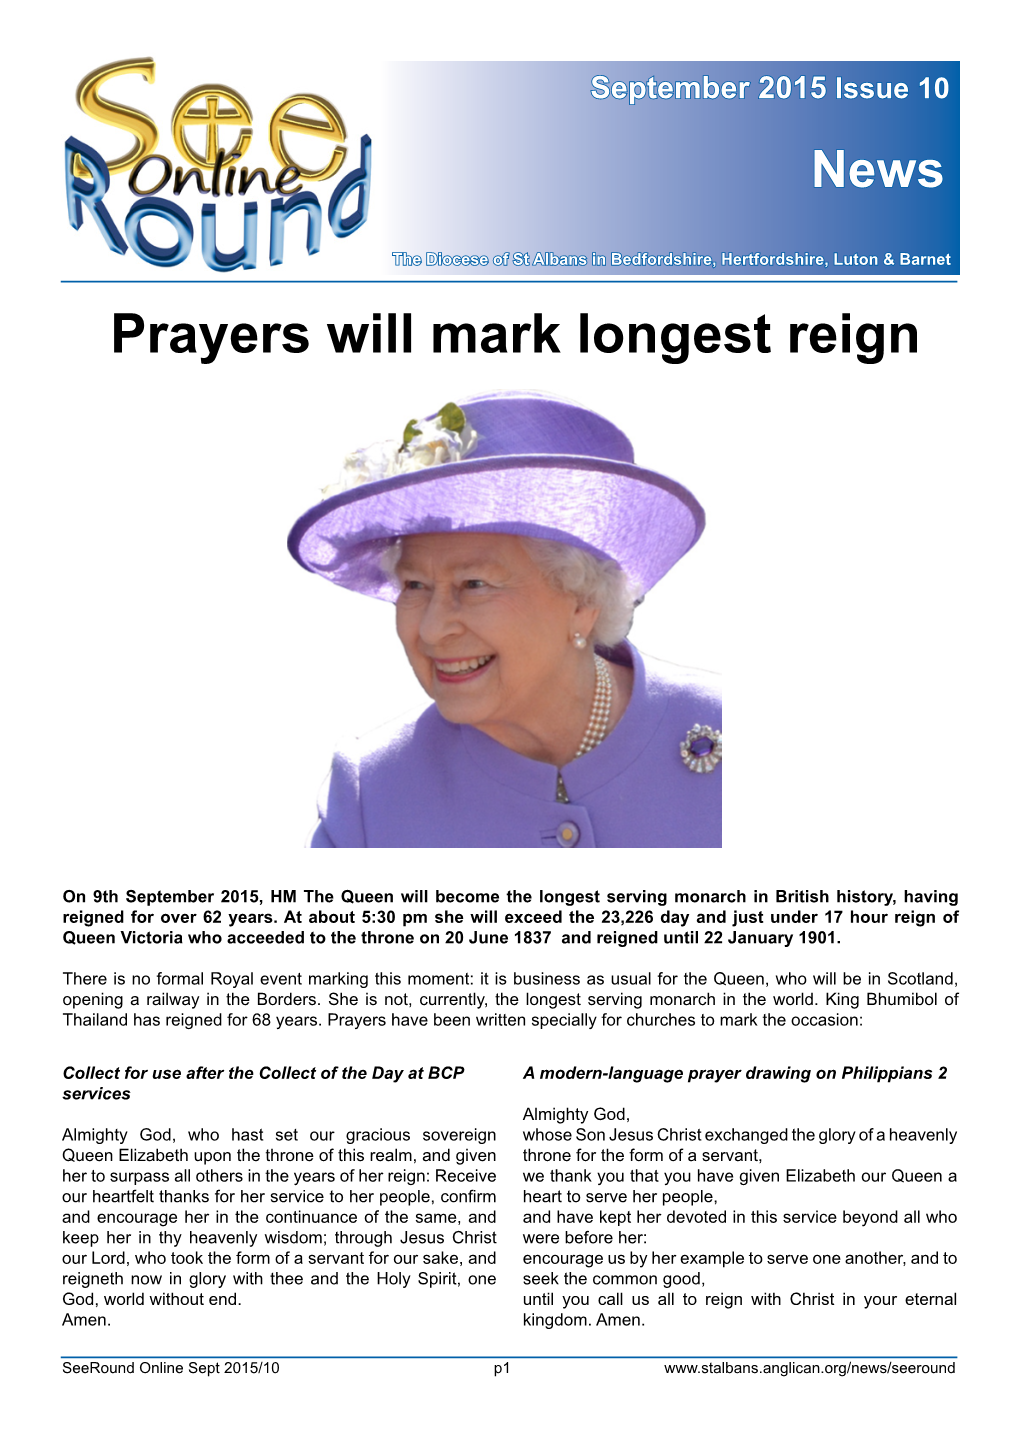 Prayers Will Mark Longest Reign